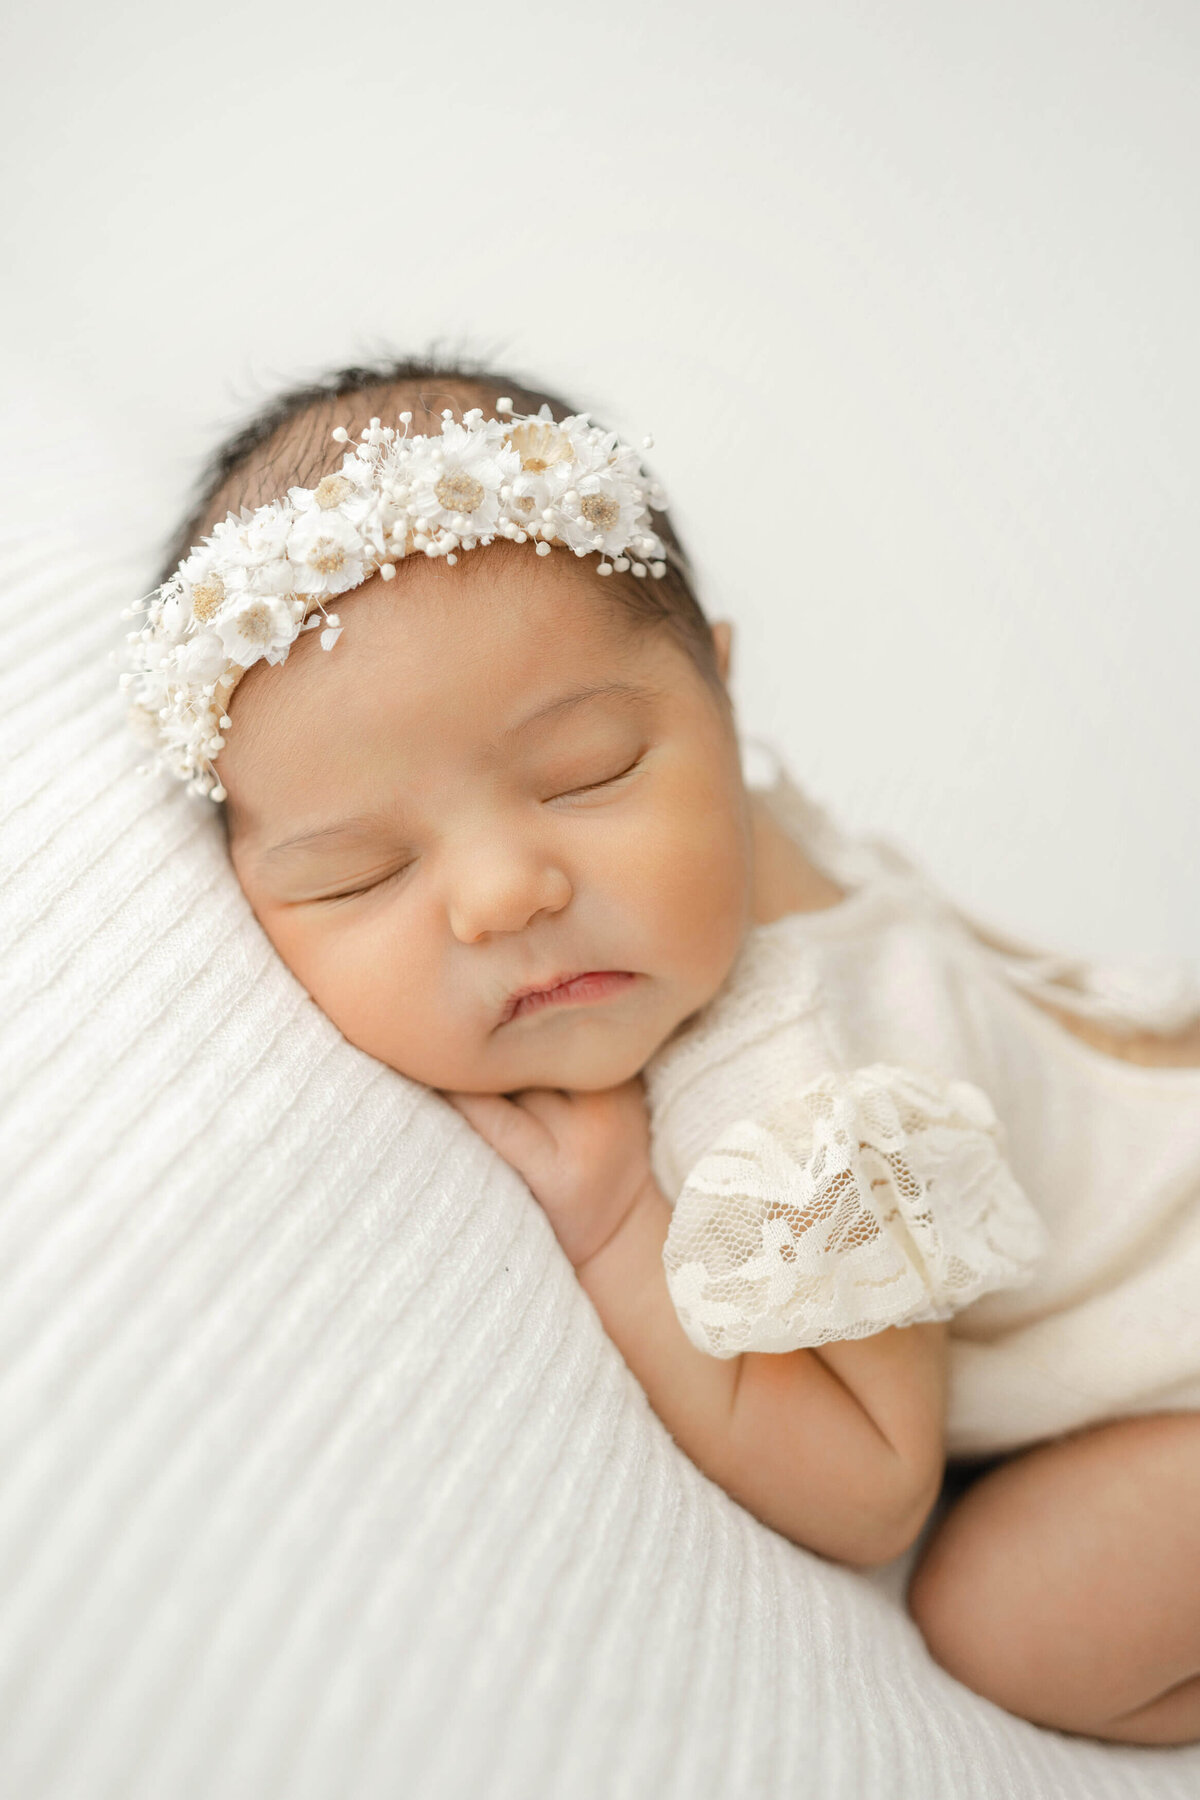 precious sleeping newborn wearing a floral crown in an okc photography studio